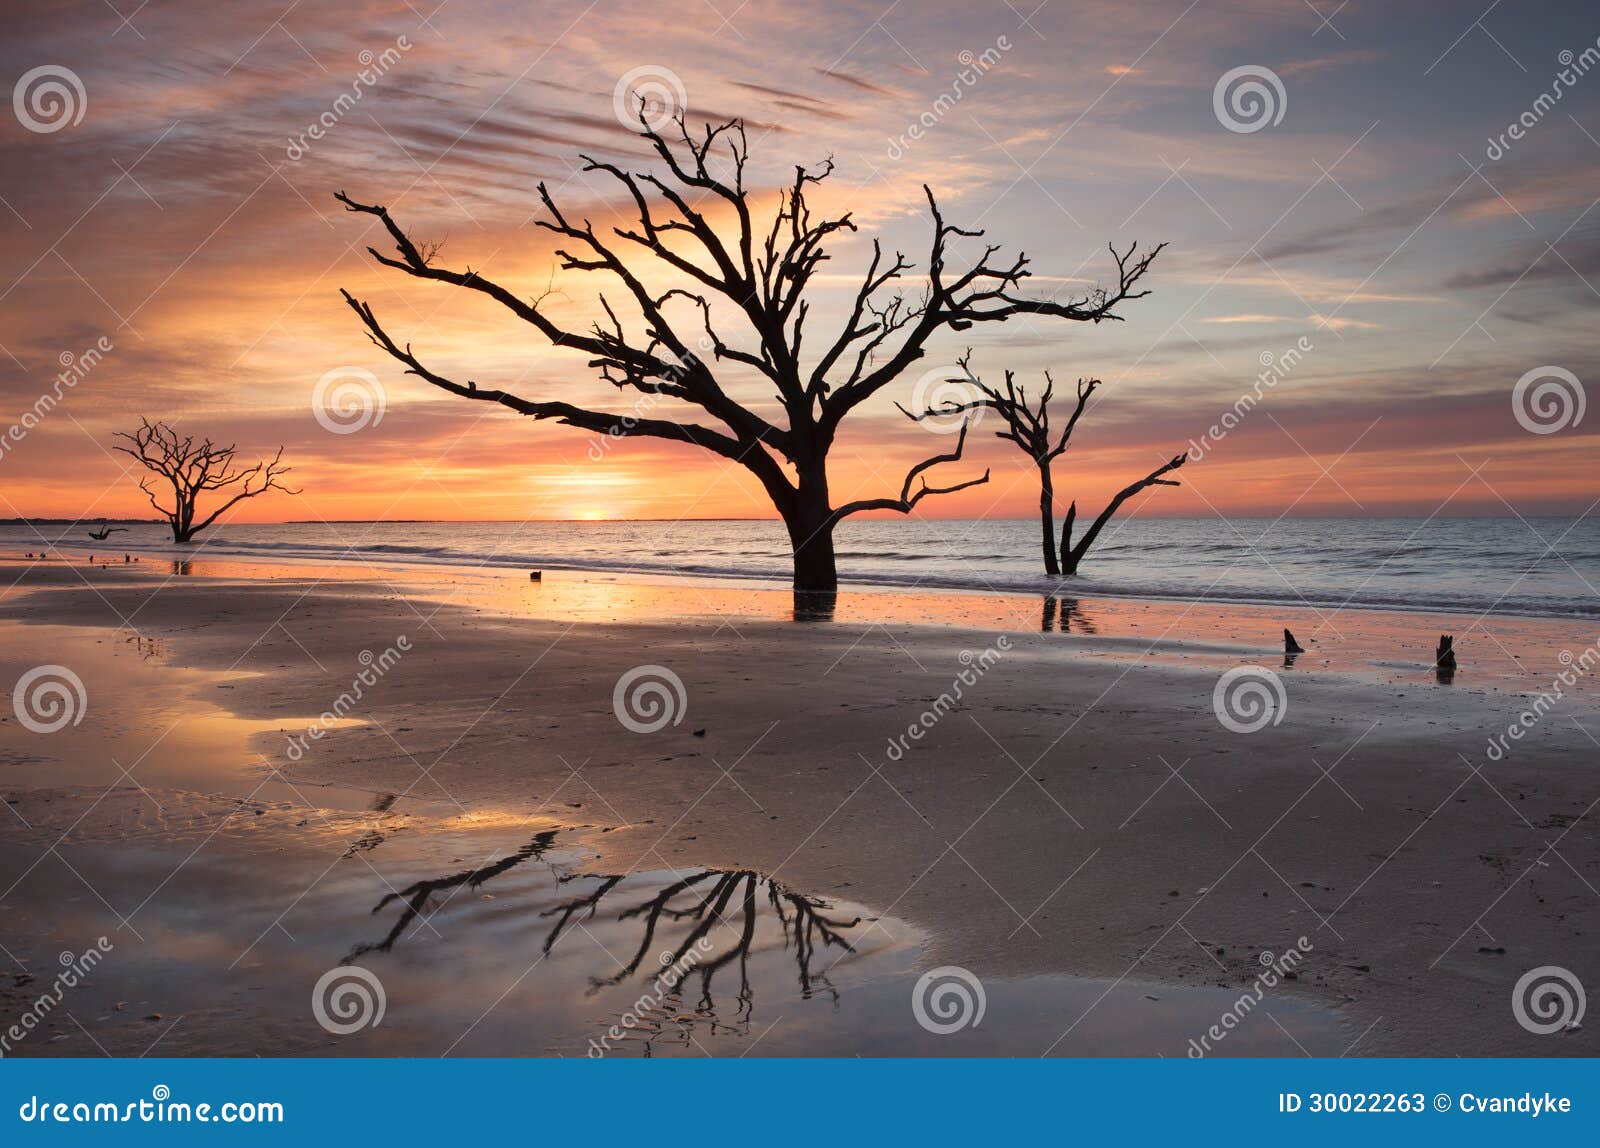 charleston sc botany bay sunrise tree on beach